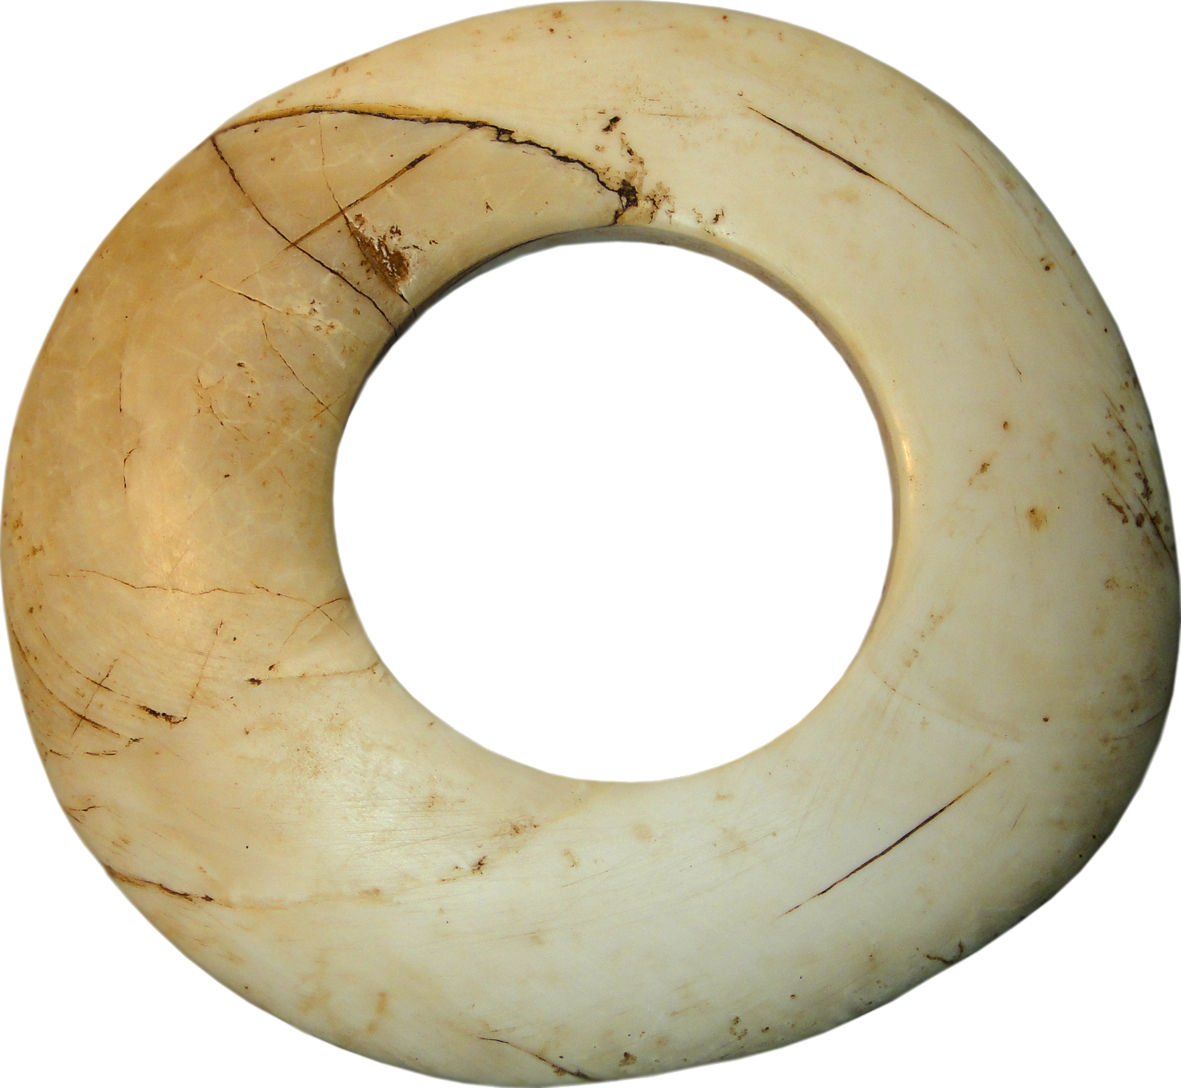 Papua New Guinea, Boiken People, Wenga Clam Shell Ring (reverse)